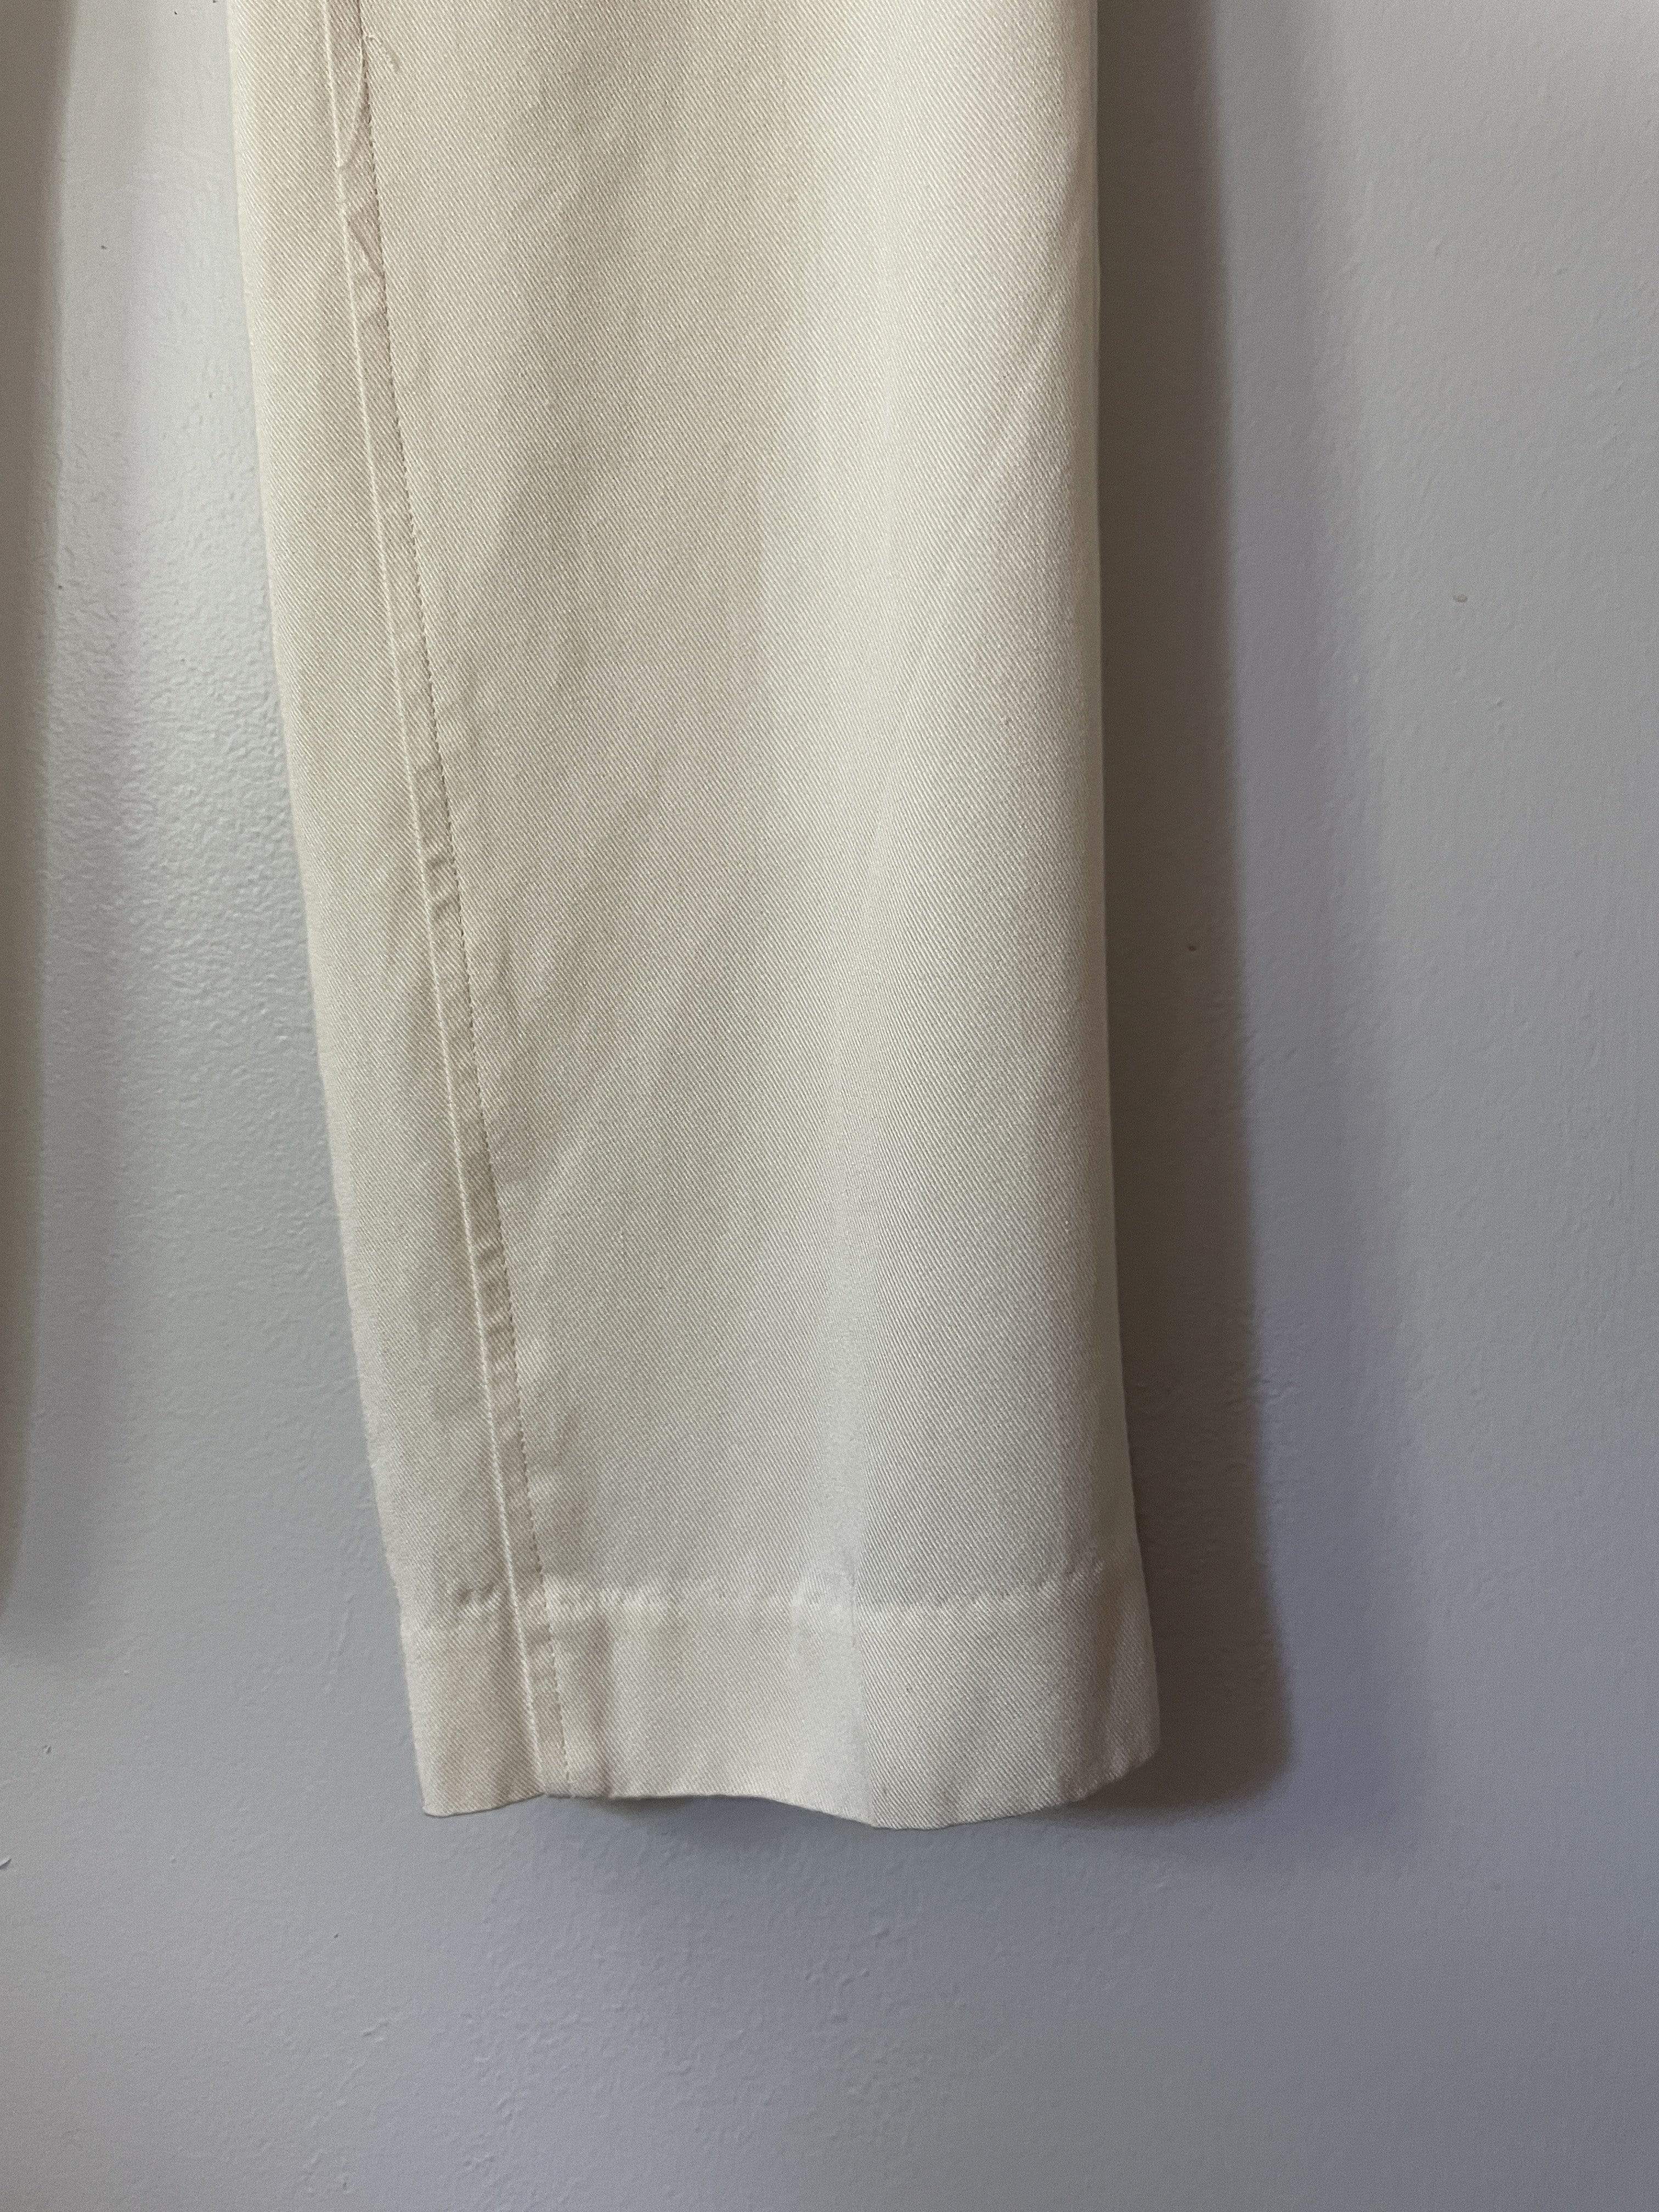 Pant Markoo Ivory Cotton Pant Size XS NEW